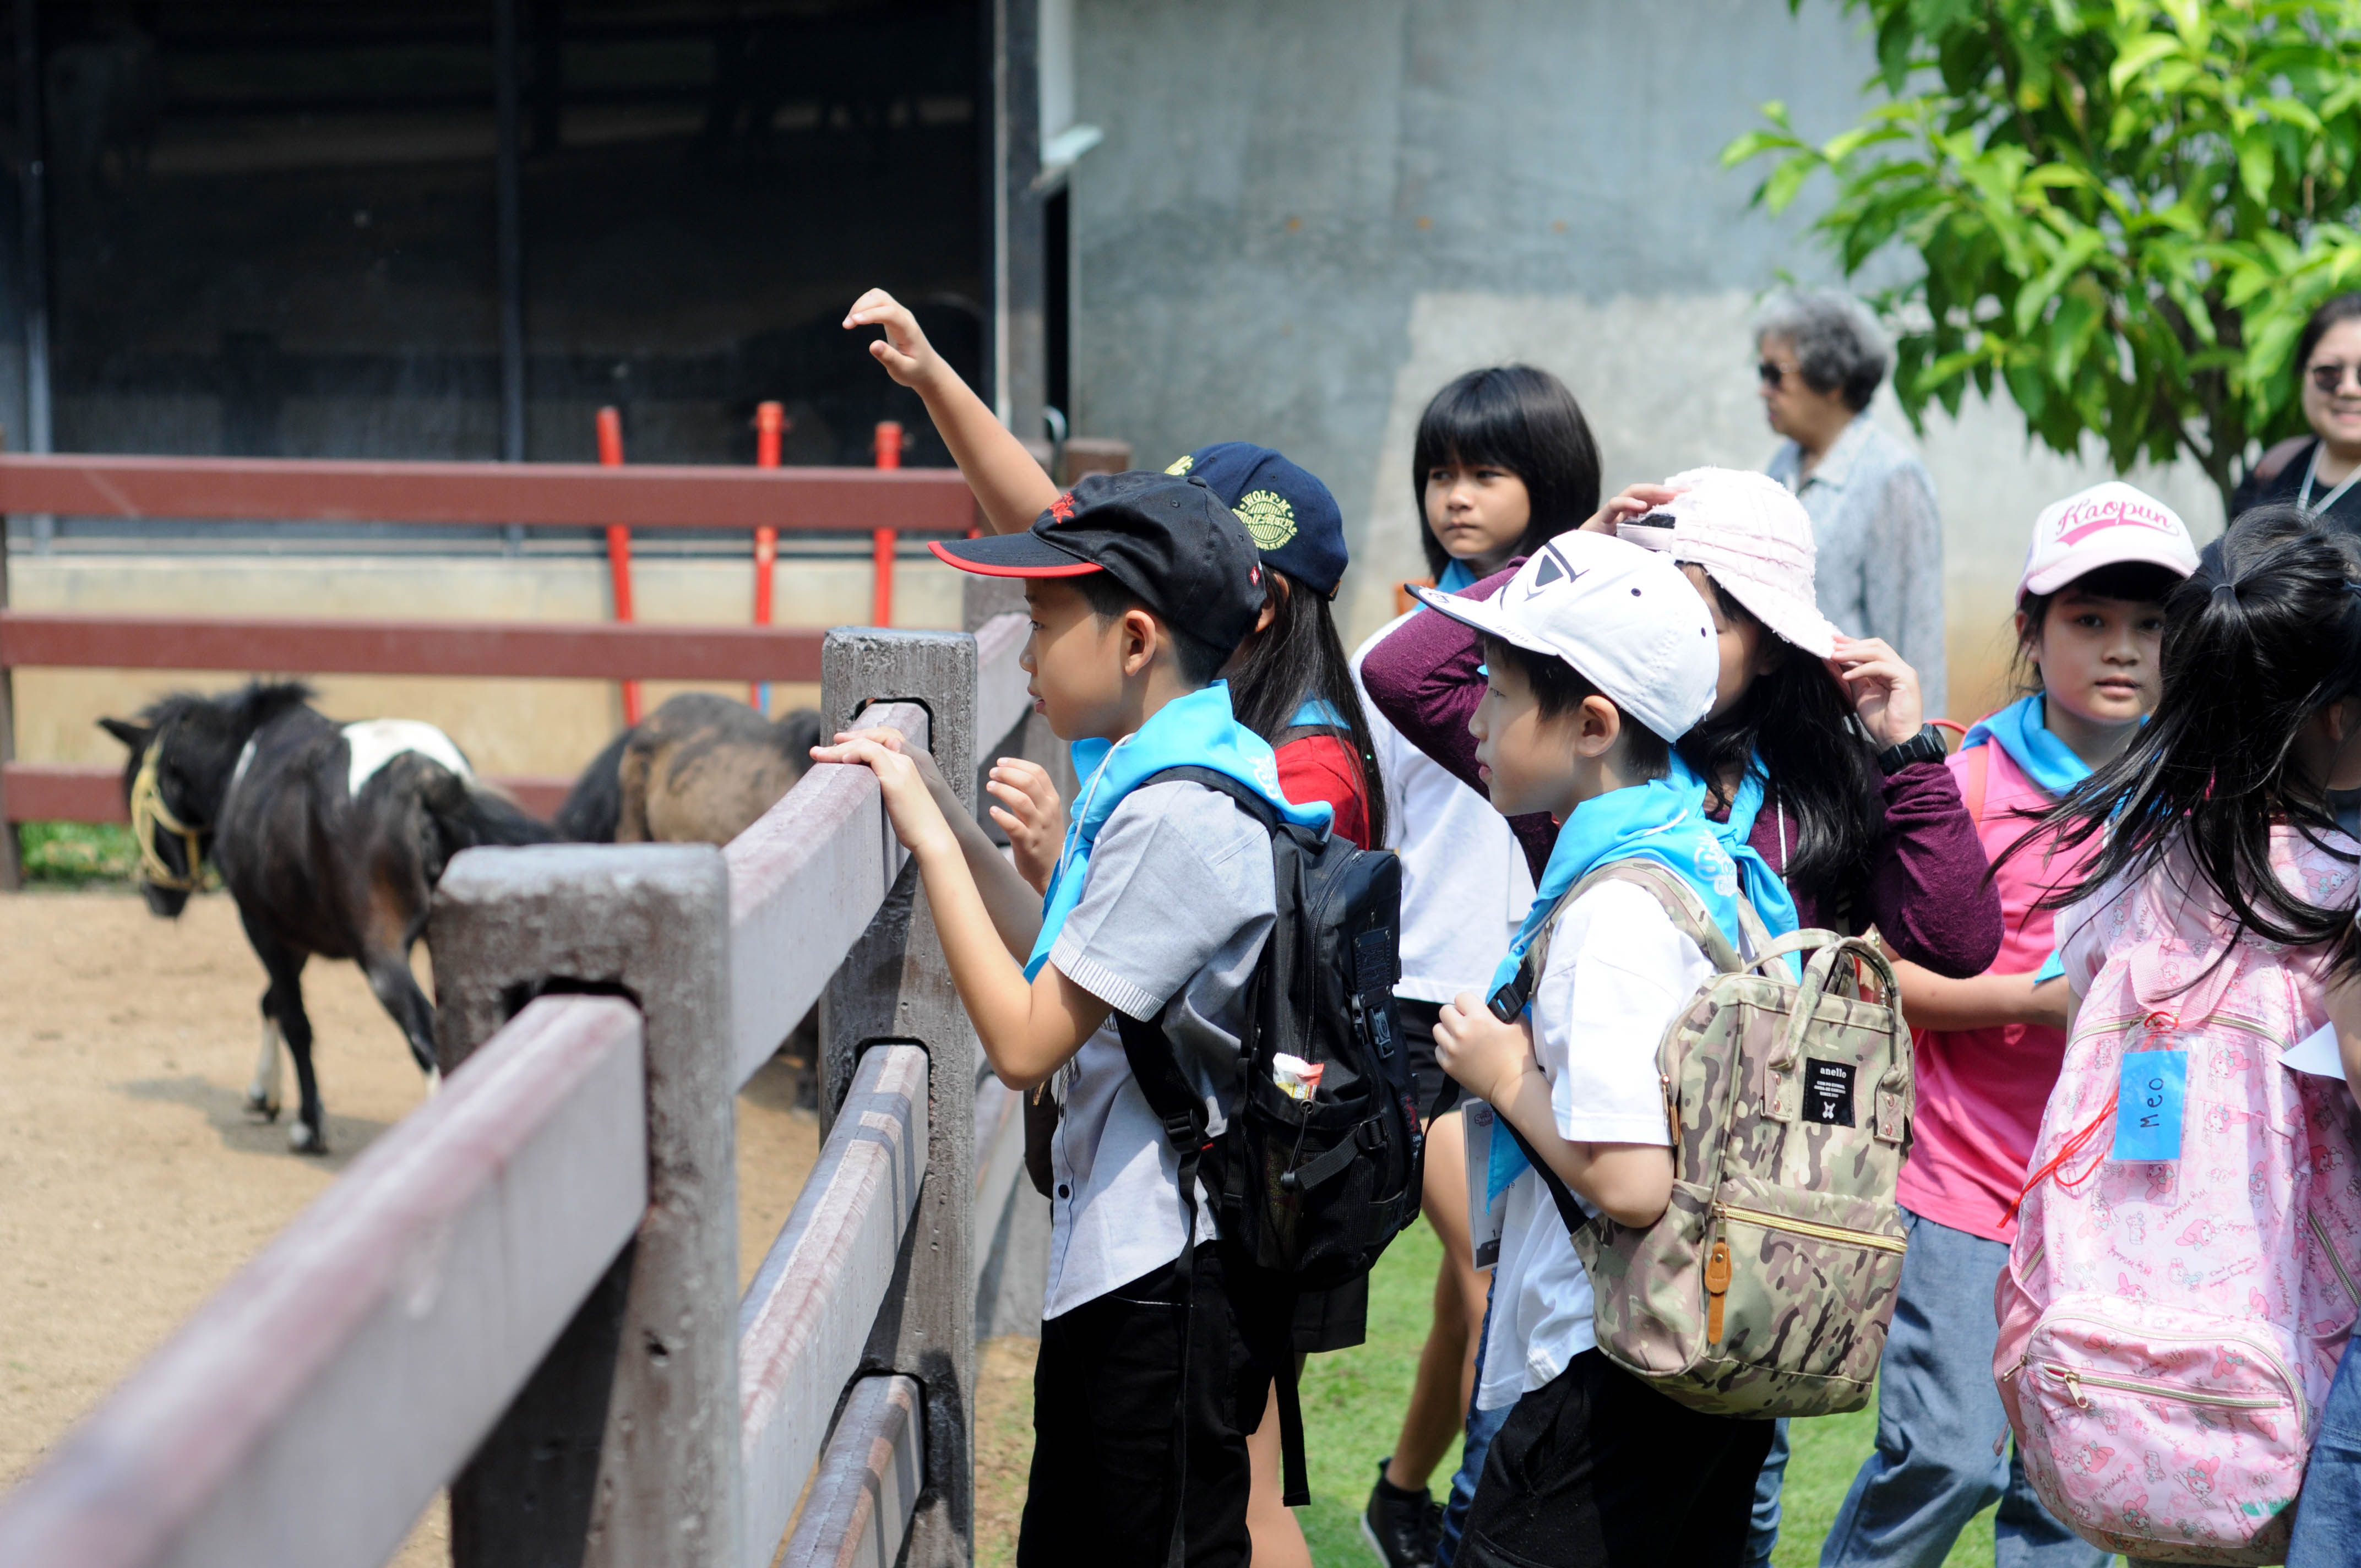 Little Farmer Fun Day at Fountain Tree Resort, khao yai